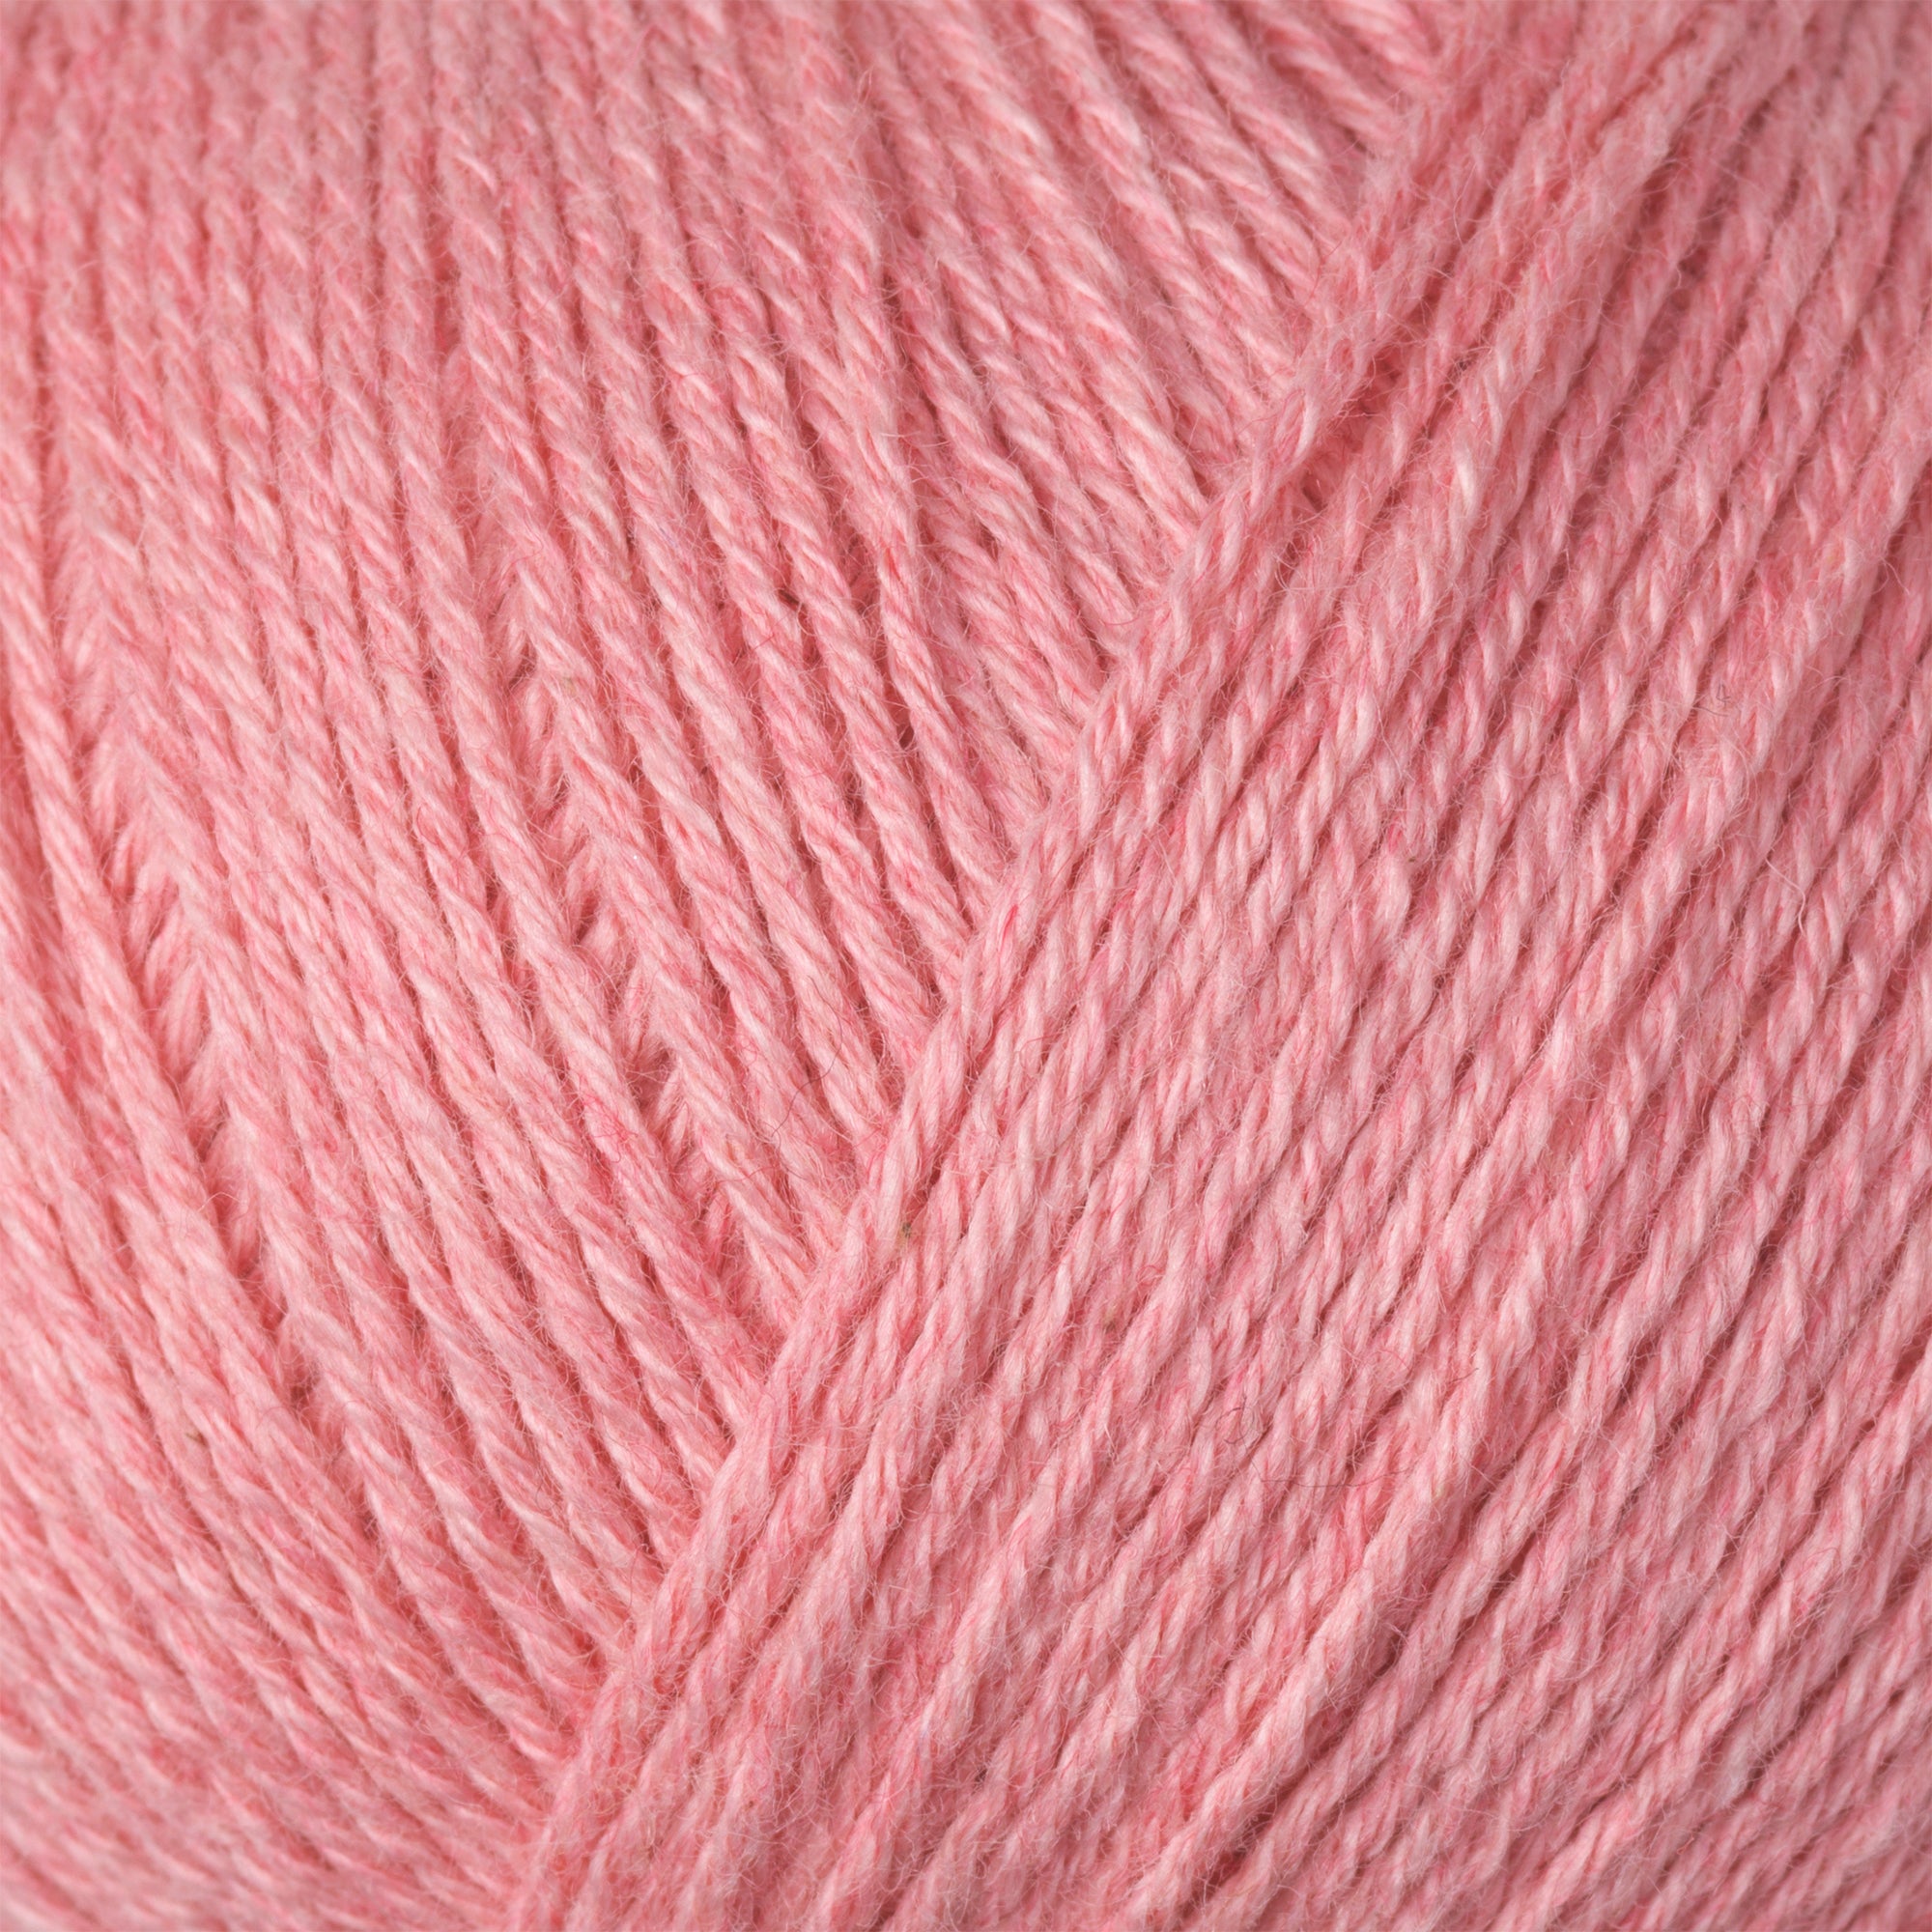 Knitting for Olive Cotton Merino - Strawberry Icecream